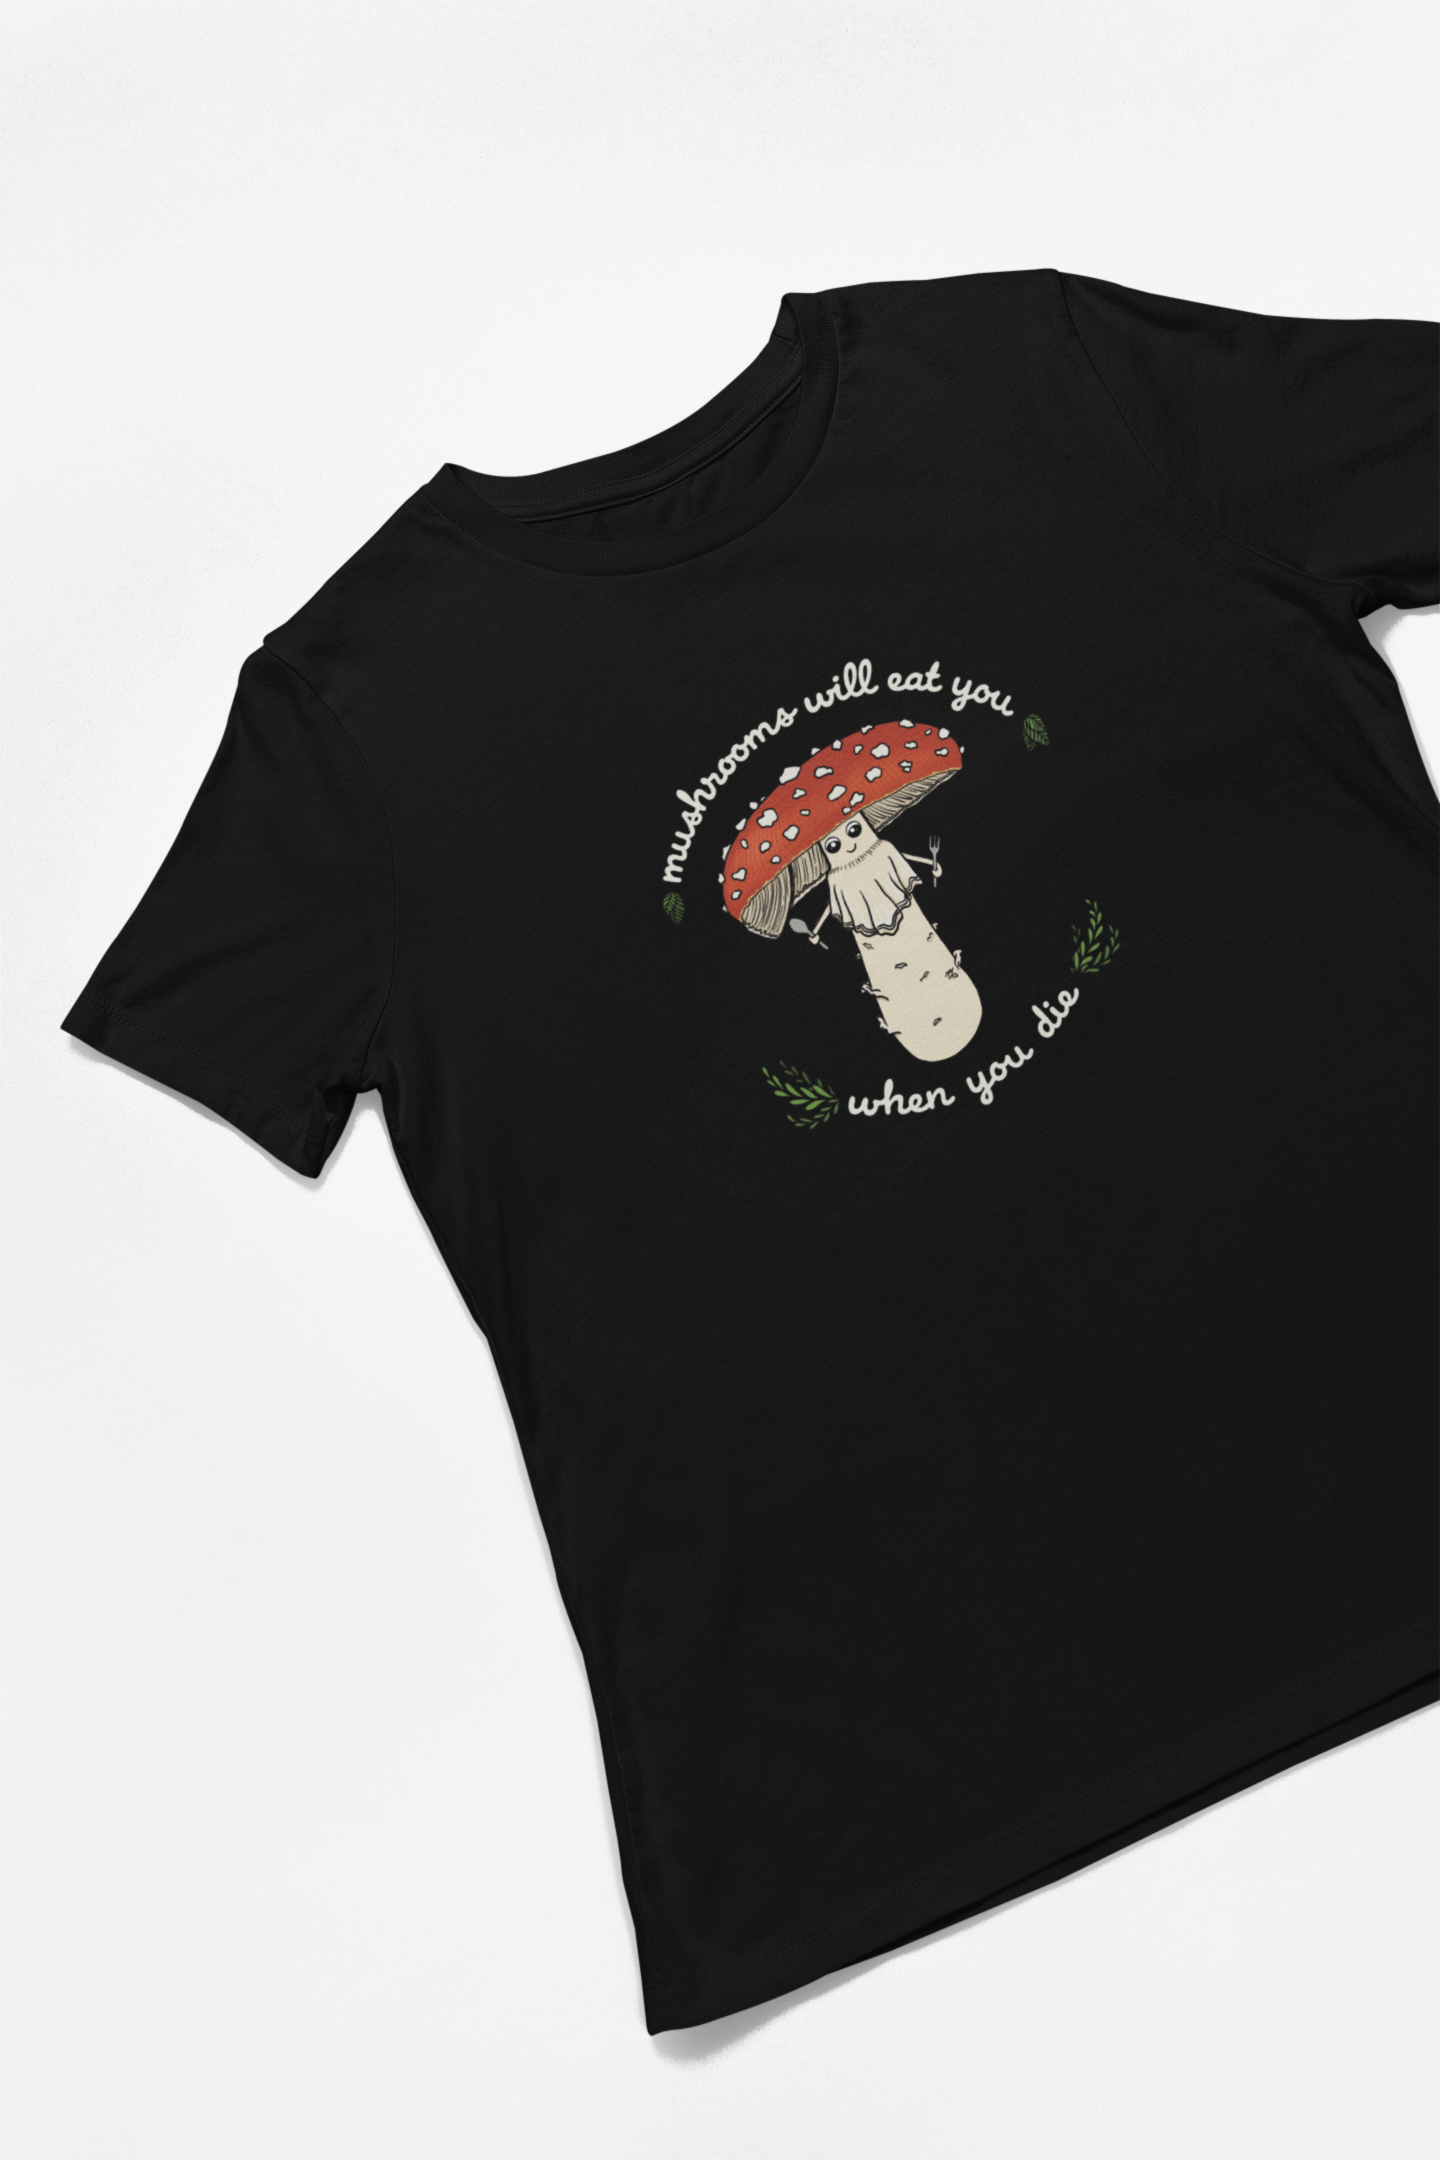 Mushrooms Will Eat You When You Die | Unisex 100% Cotton T-Shirt | Funny Amanita Mushroom Design